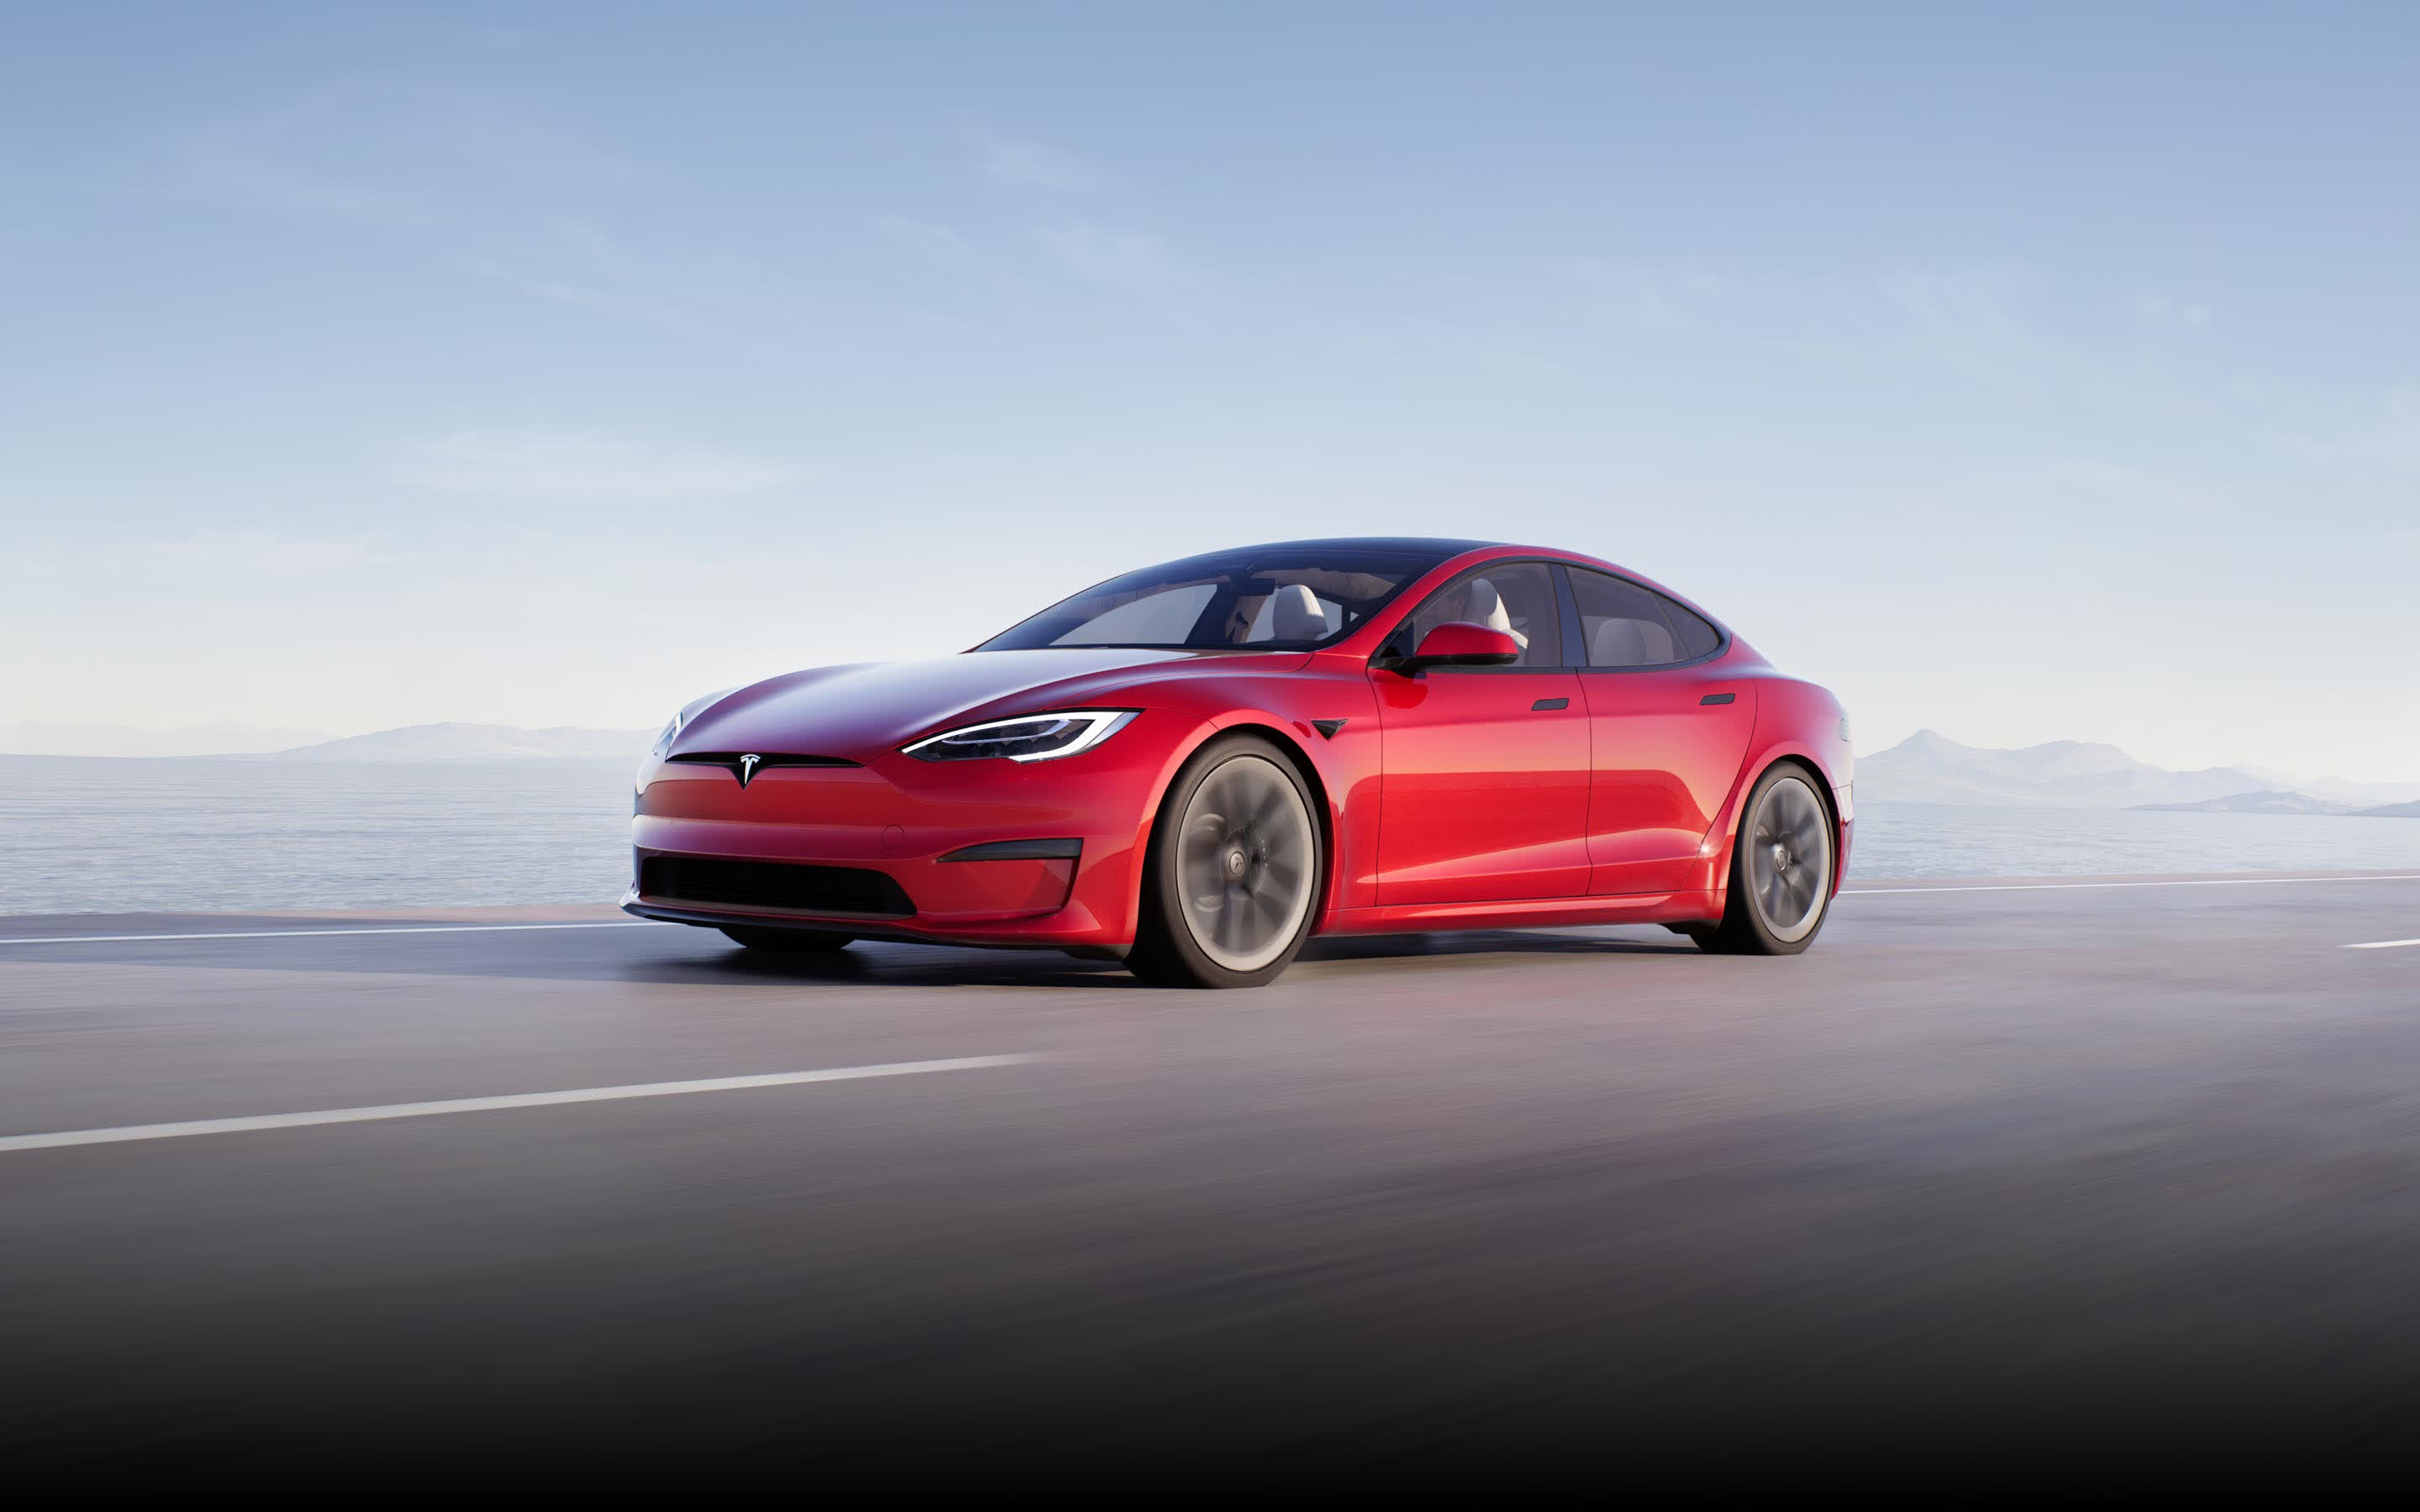 Elon Musk Tesla's Model S Plaid sets production EV record at Germany's famed Nürburgring race track thumbnail